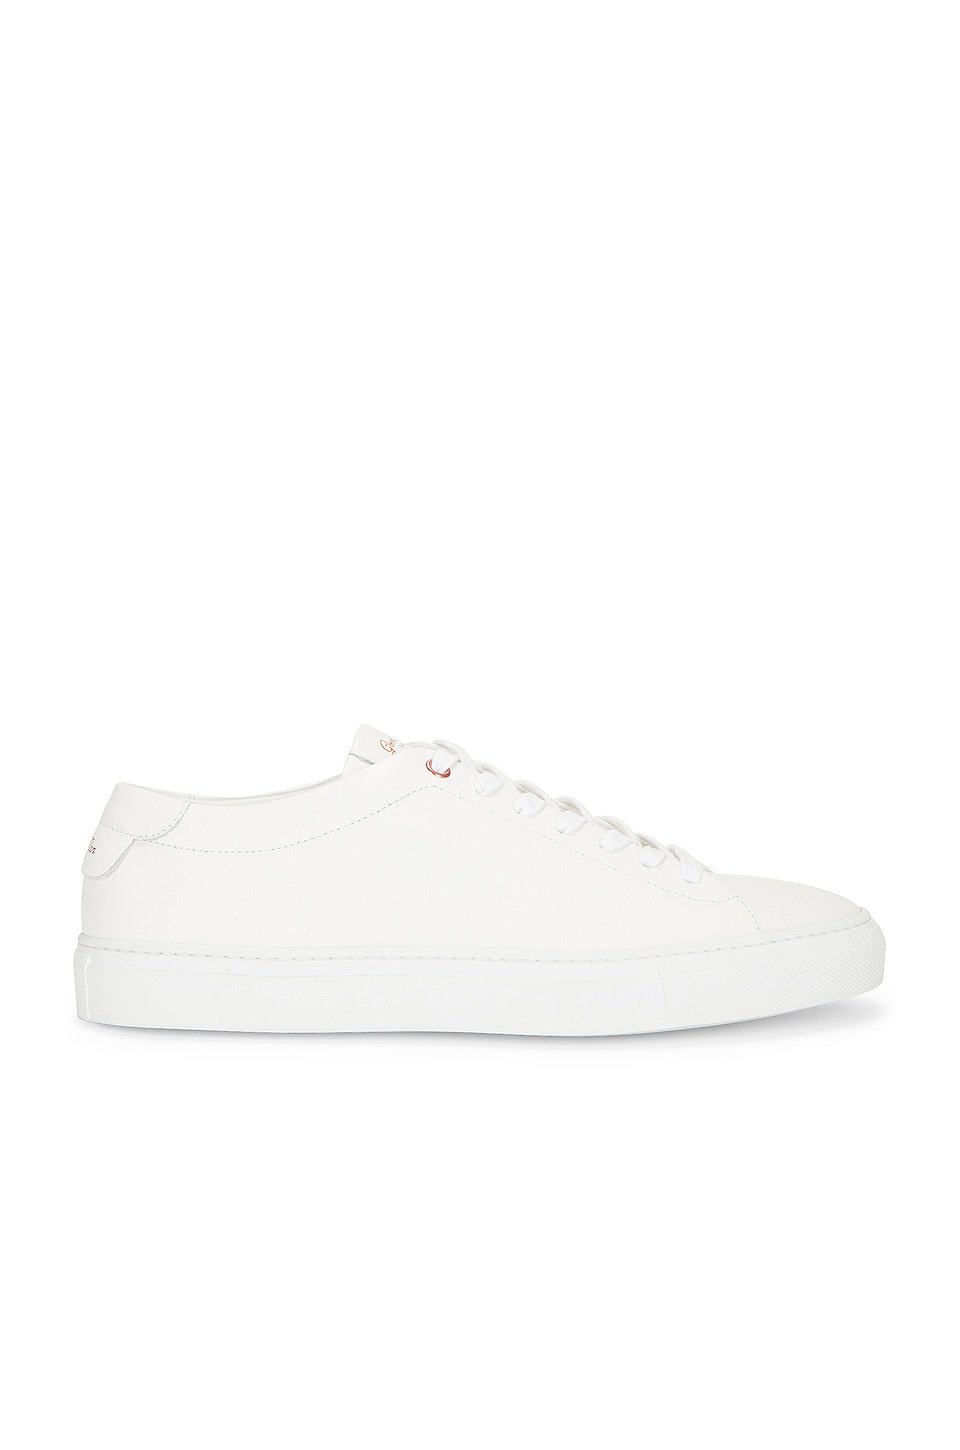 Good Man Brand Edge Mono Sneaker in white